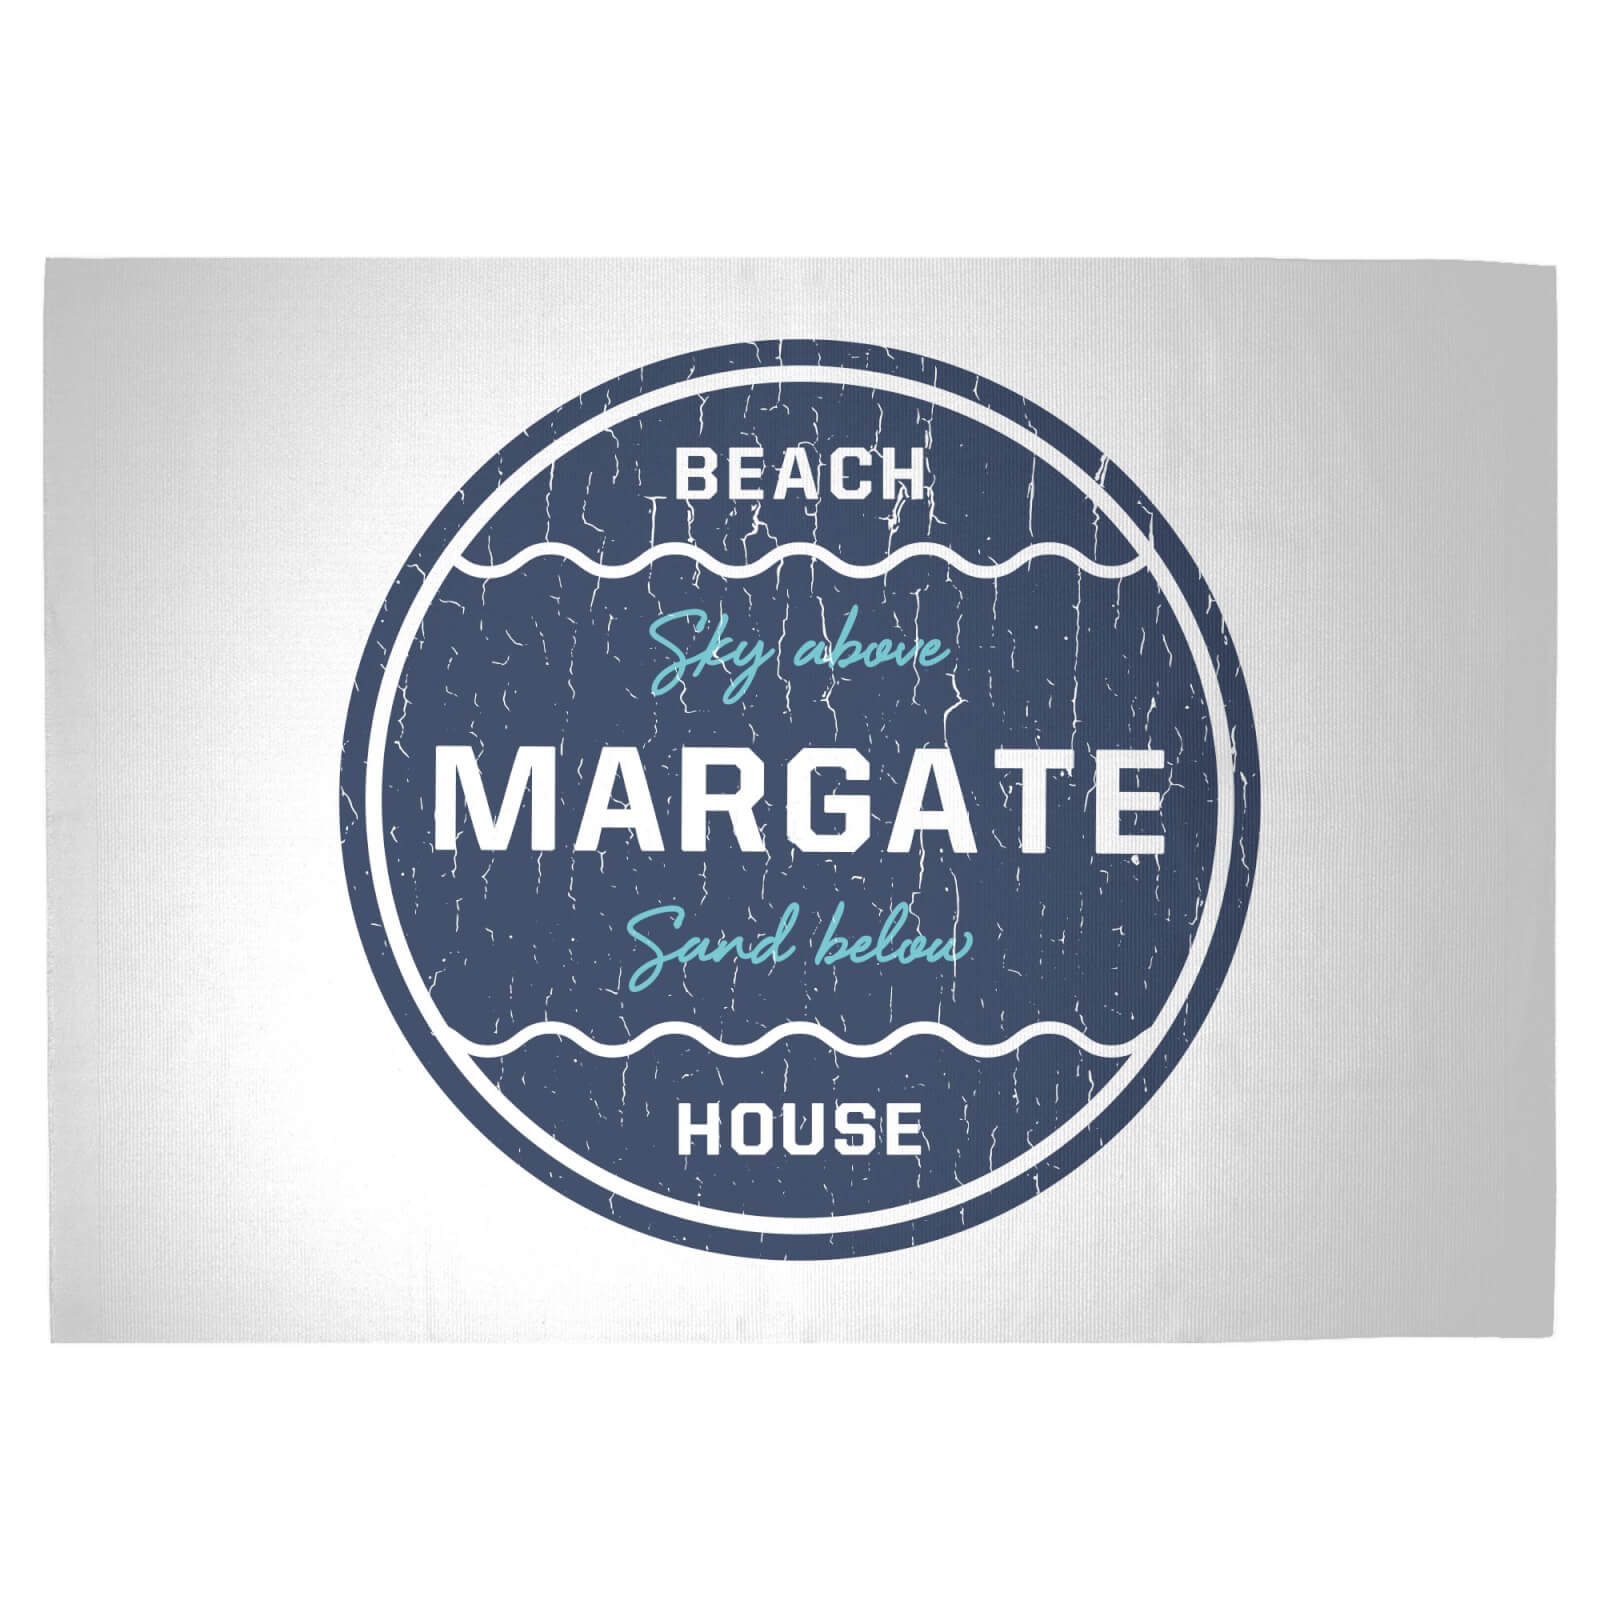 Margate Beach Badge Woven Rug - Large